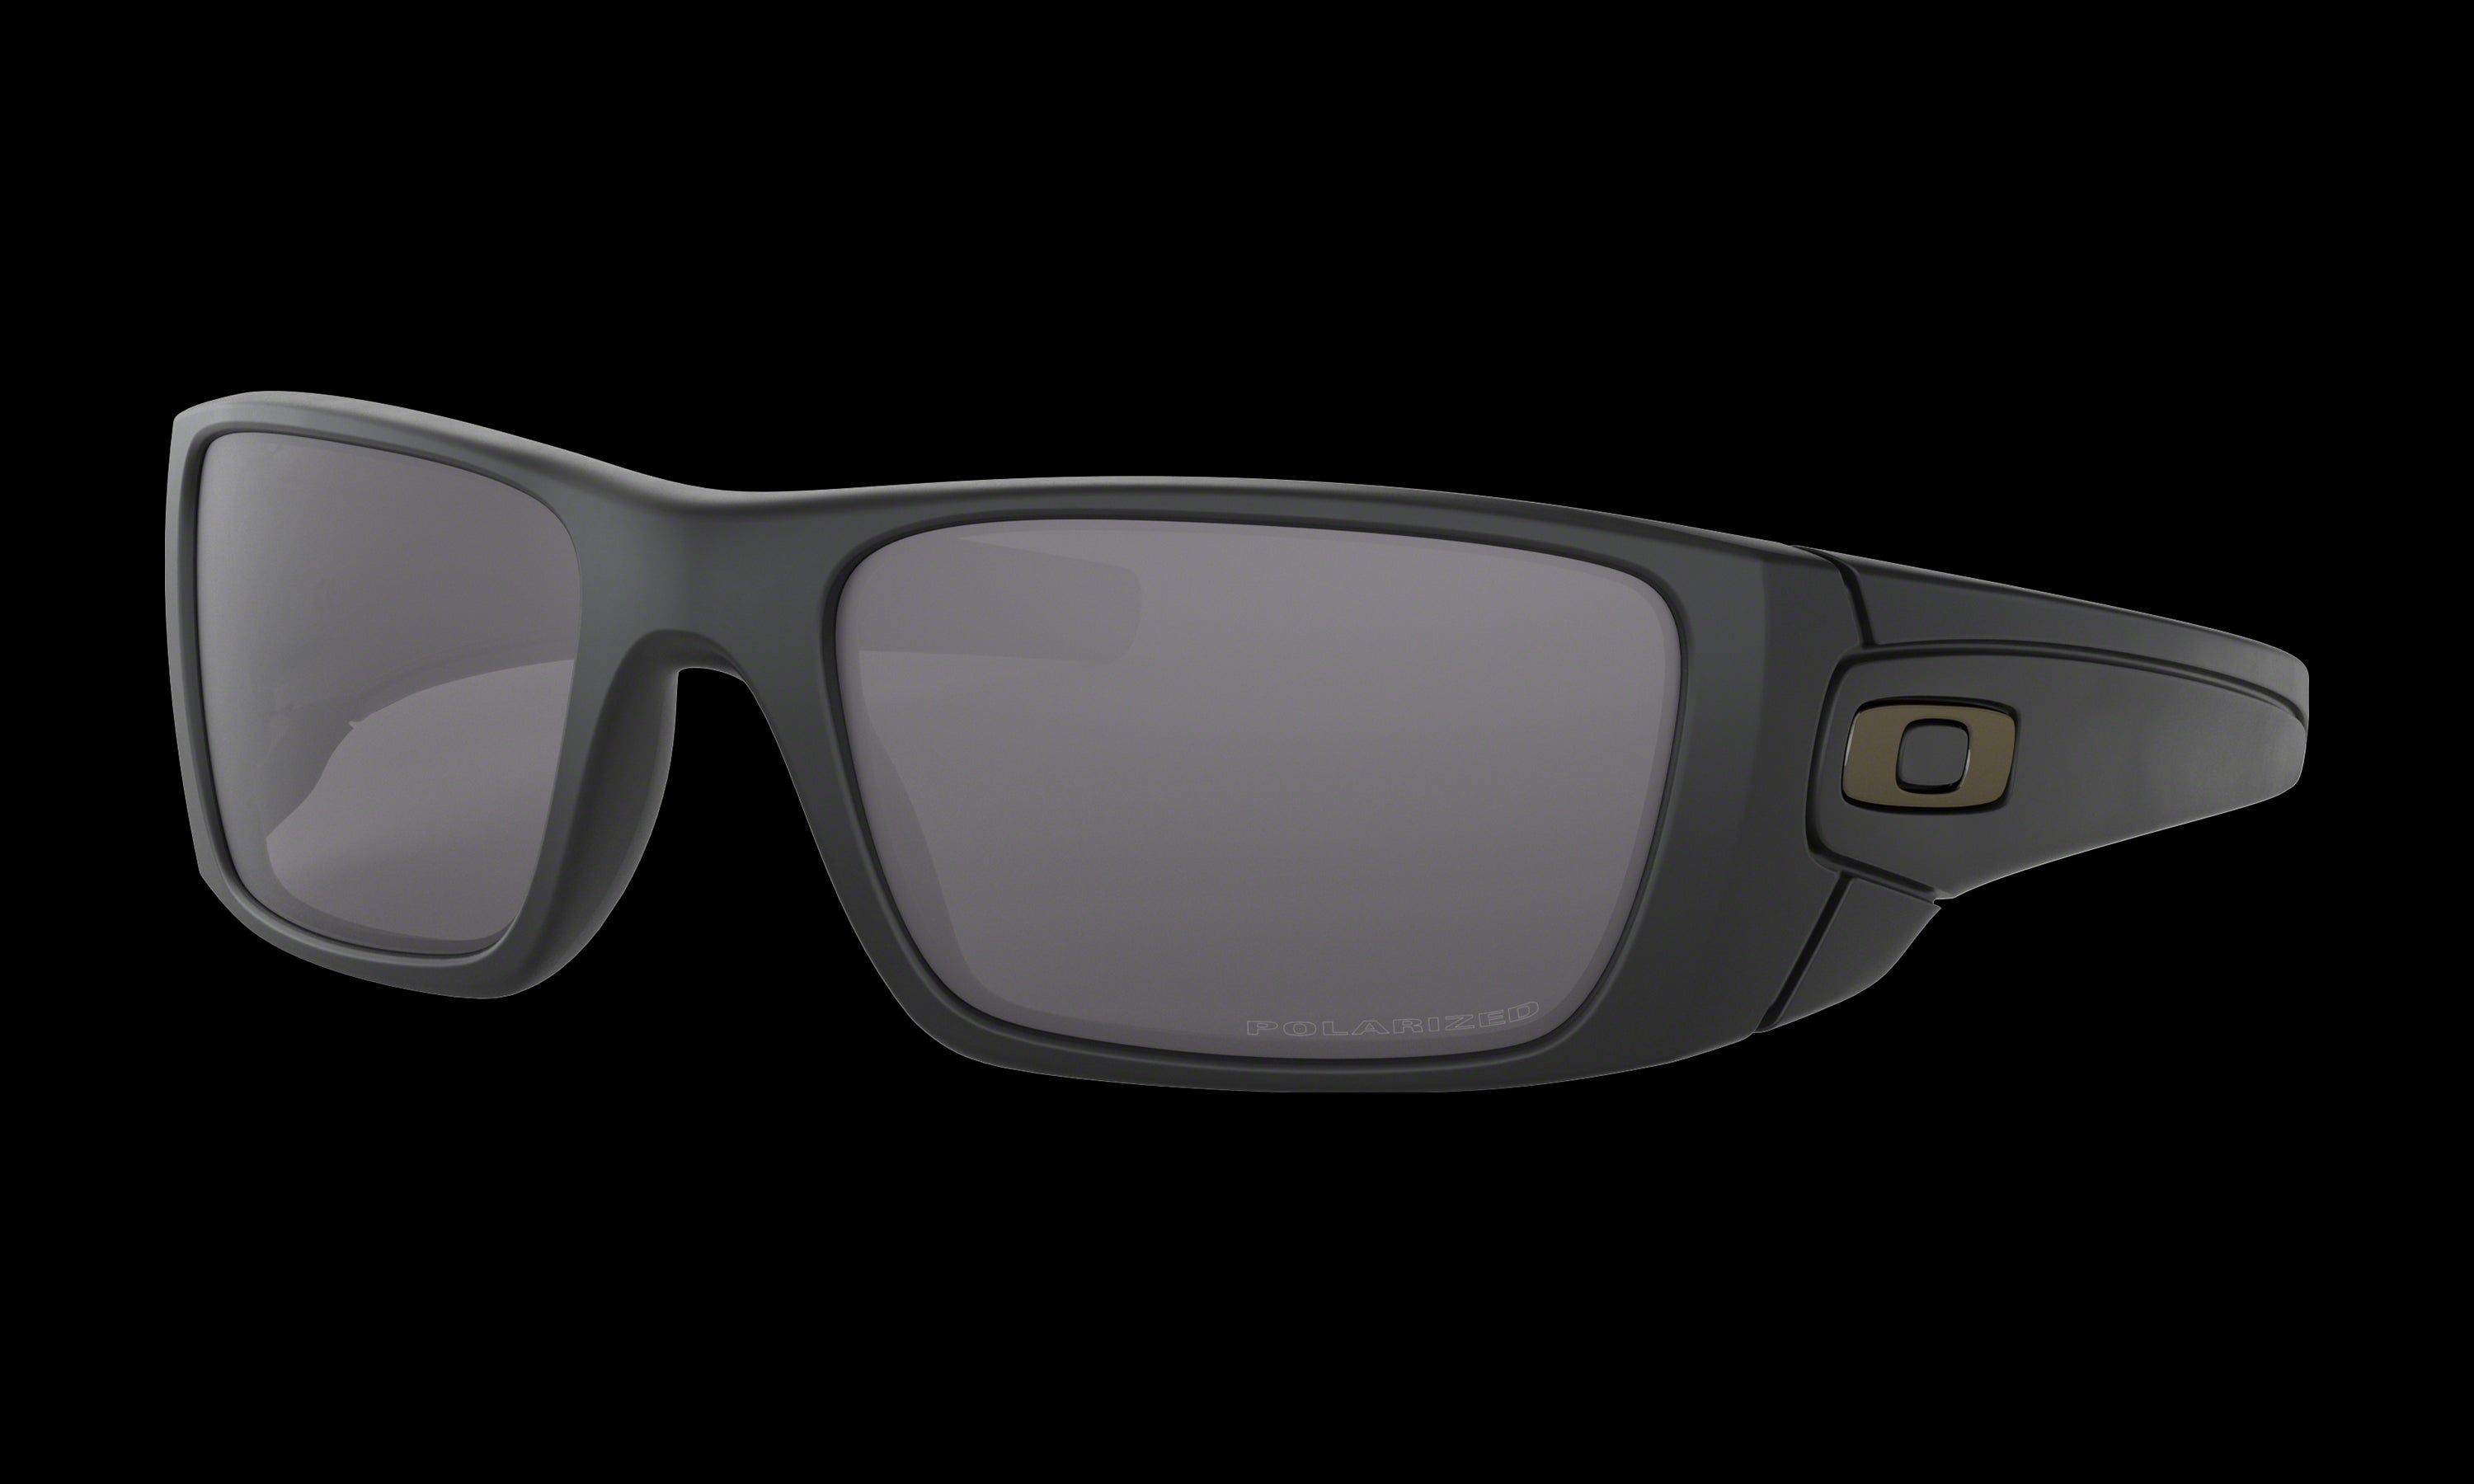 Men's Oakley Fuel Cell Sunglasses in Matte Black Grey Polarized